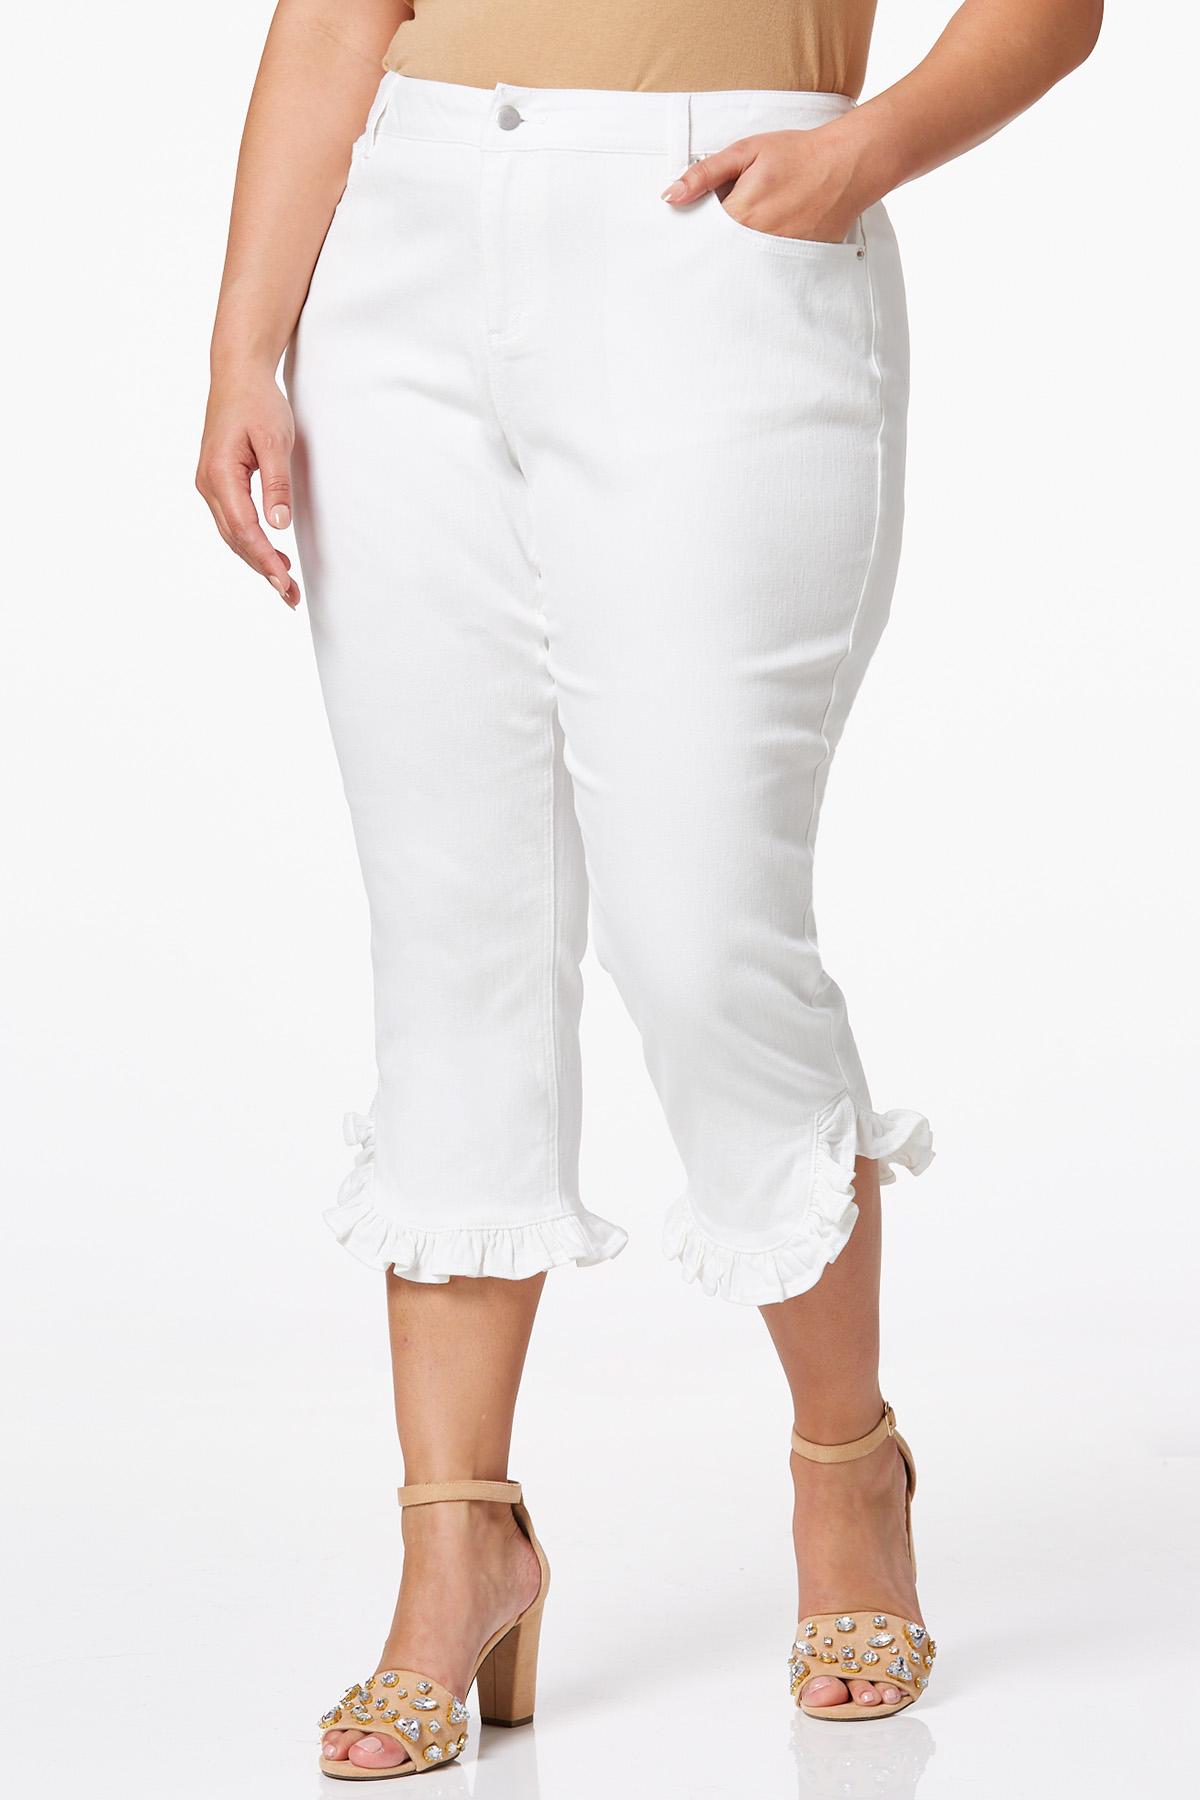 Cato Fashions  Cato Plus Size White Cropped Ruffle Jeans